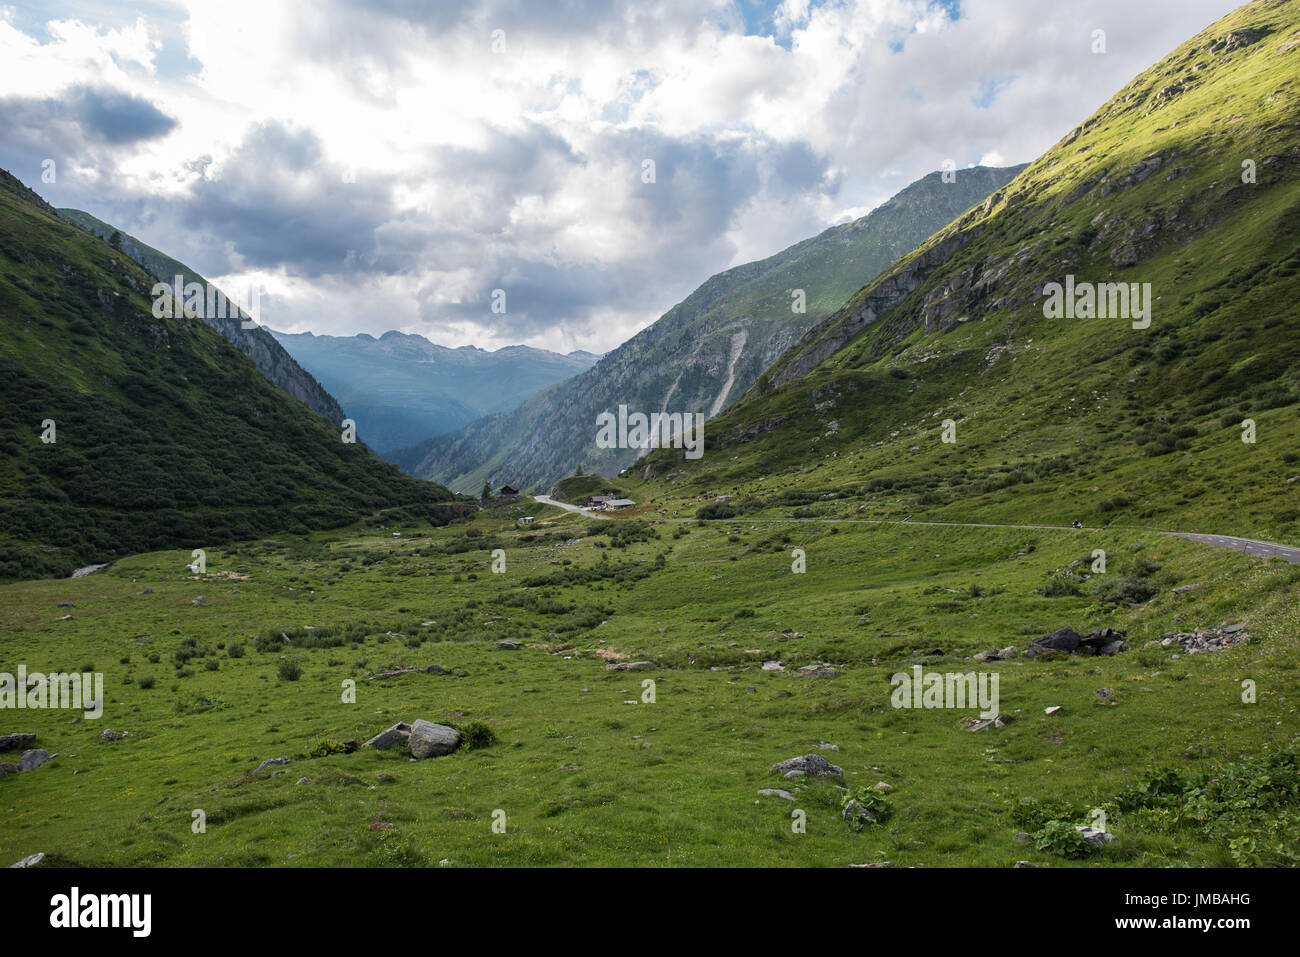 Nufenenpass canton vallese, modo per Ulrichen Foto Stock